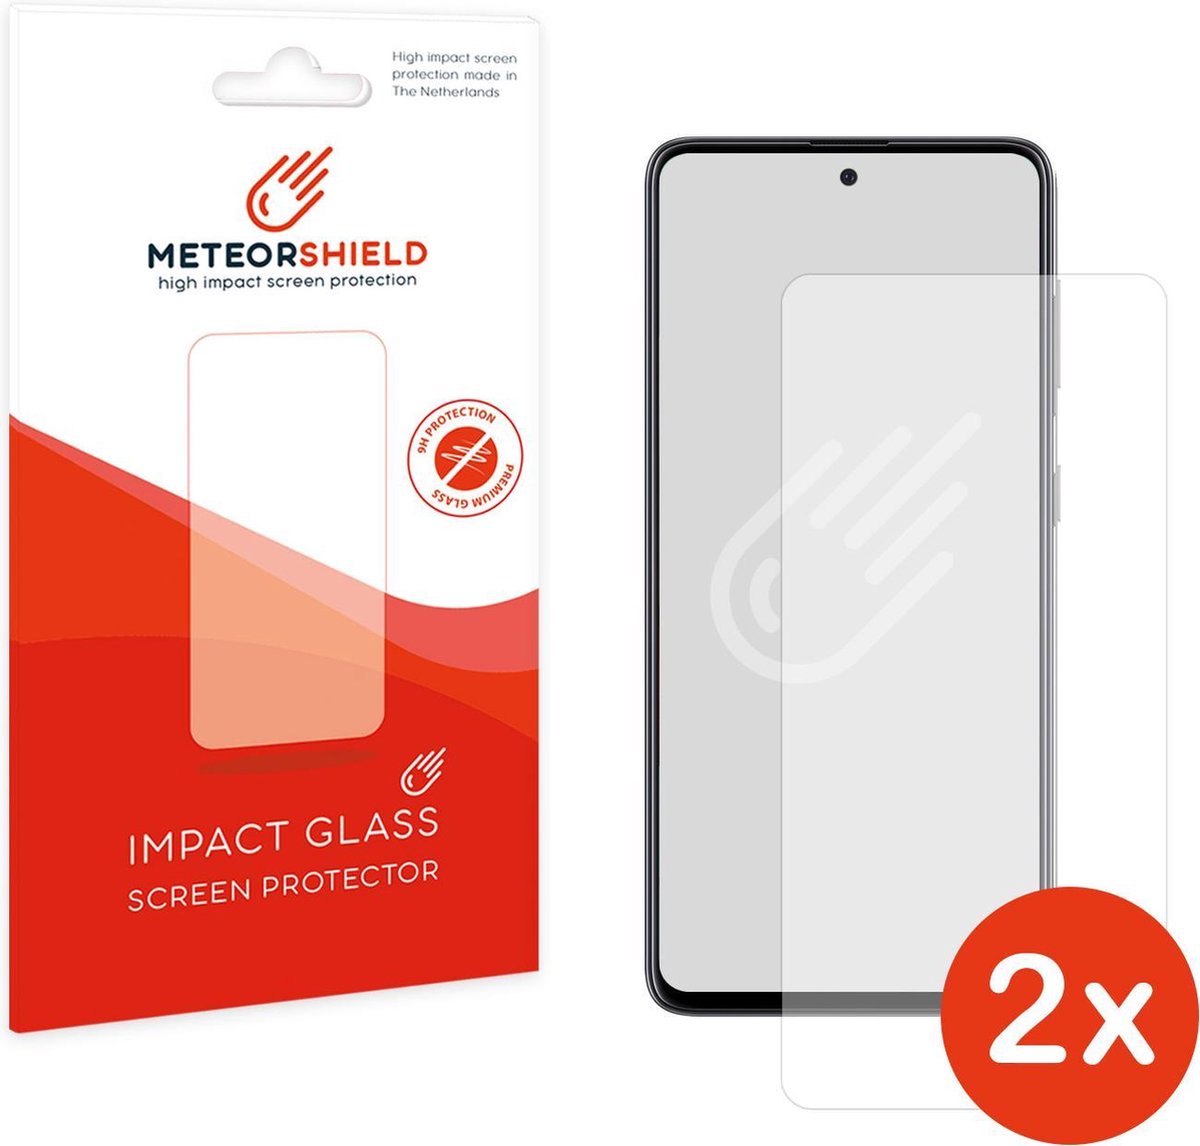 2 stuks: Meteorshield Samsung Galaxy A52s screenprotector - Ultra clear impact glass